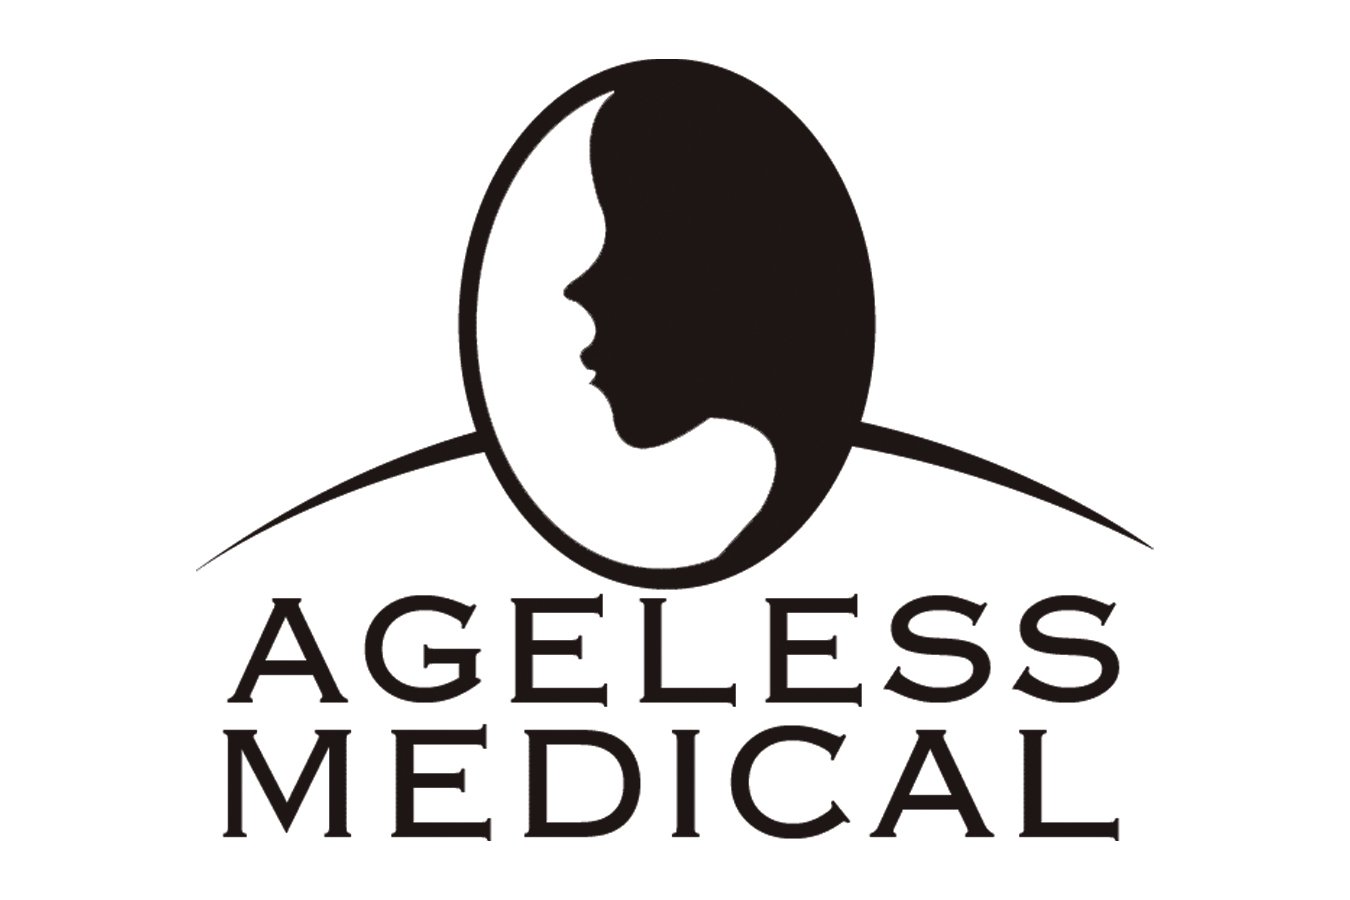 Ageless Medical BW